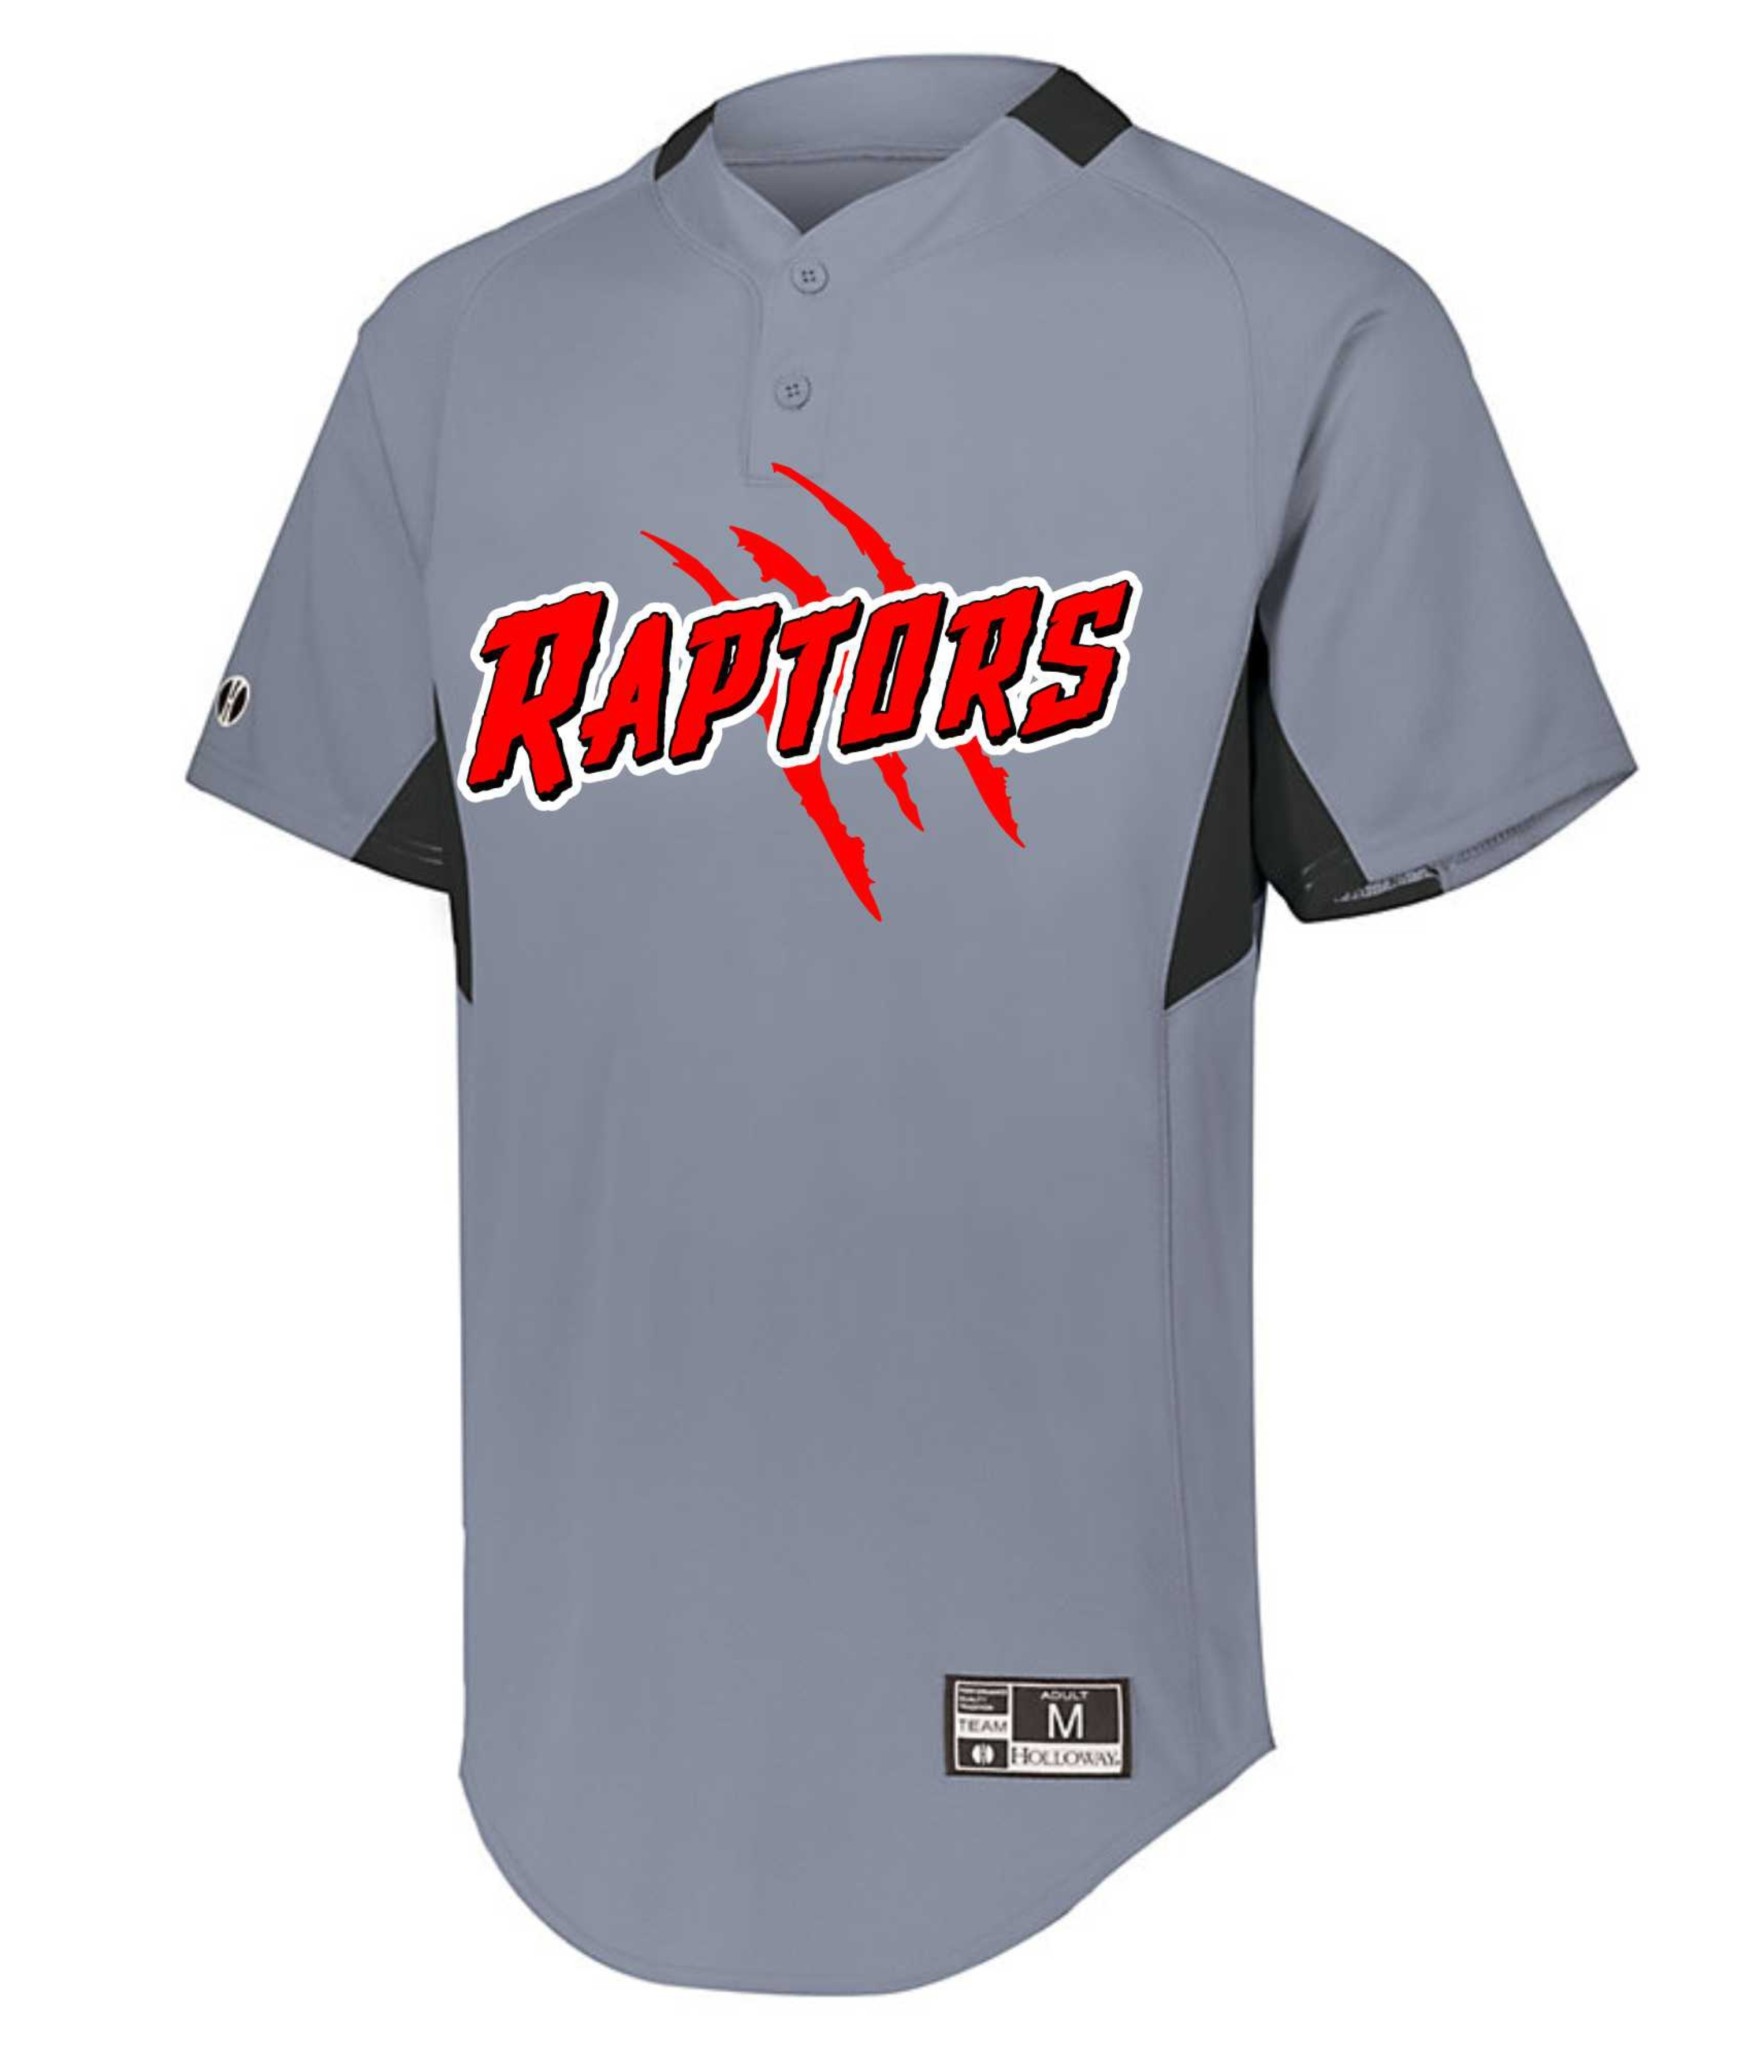 raptors baseball shirt